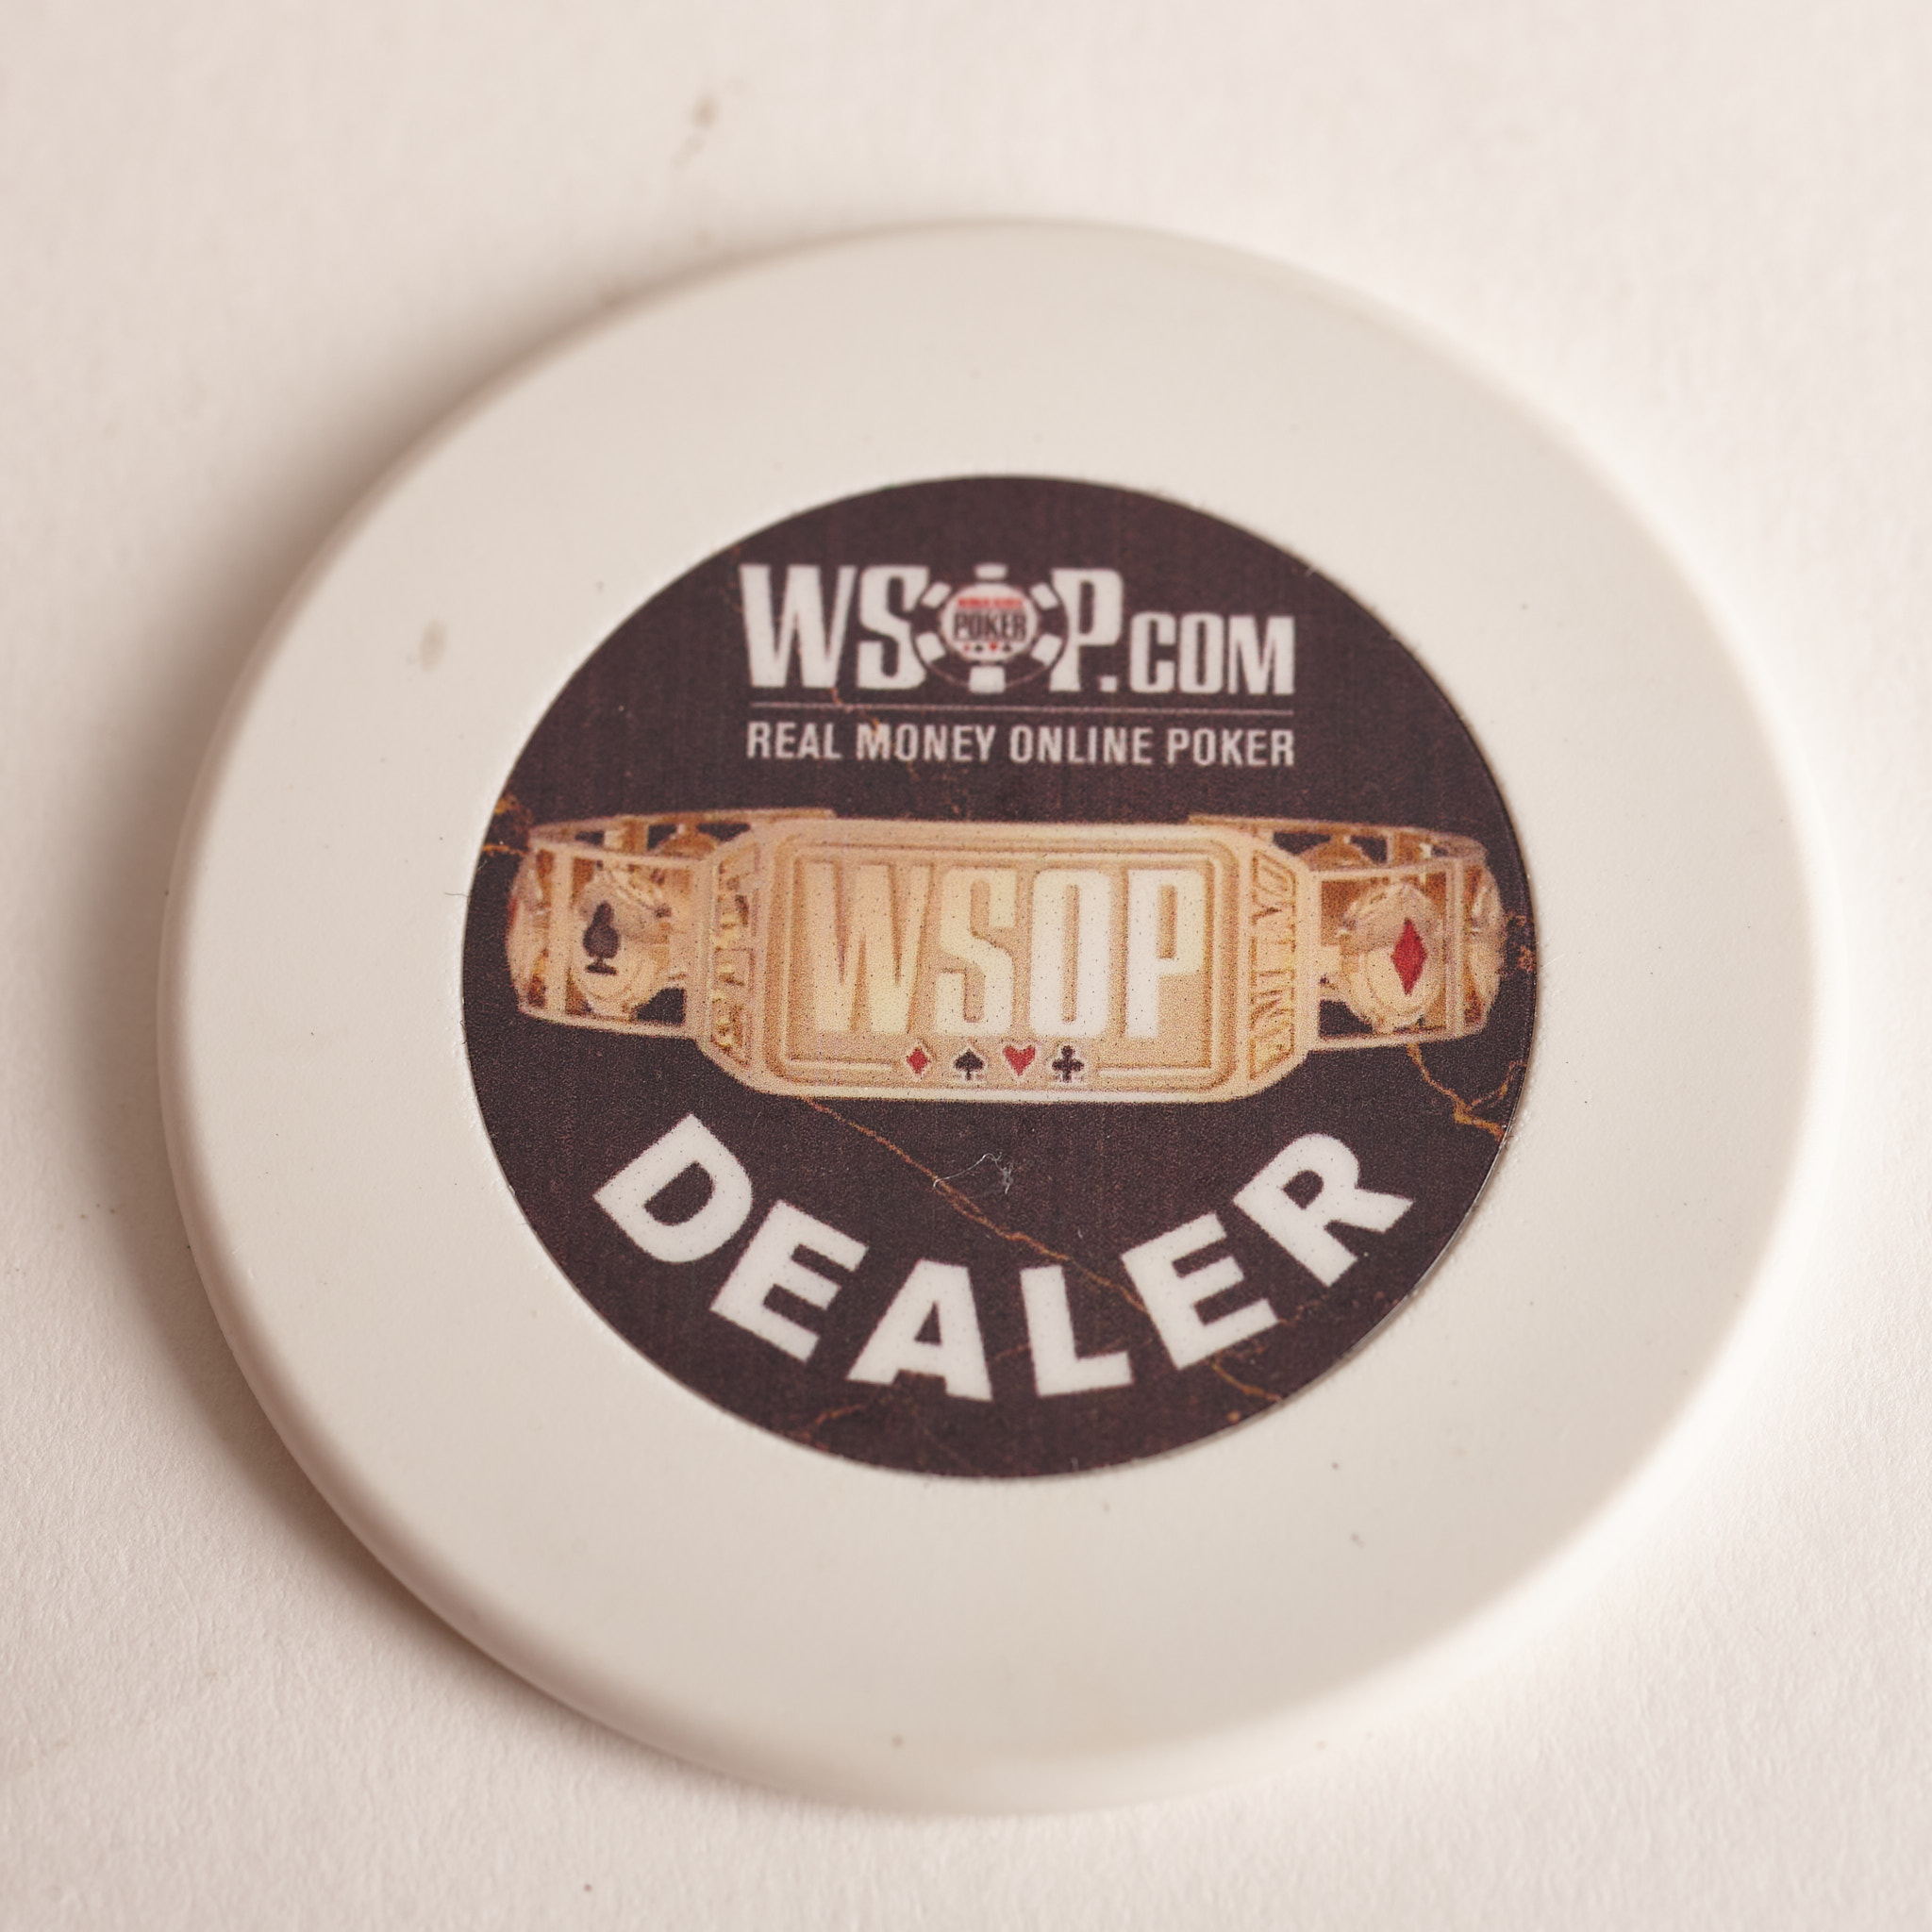 WSOP WORLD SERIES OF POKER, DEALER, Poker Dealer Button